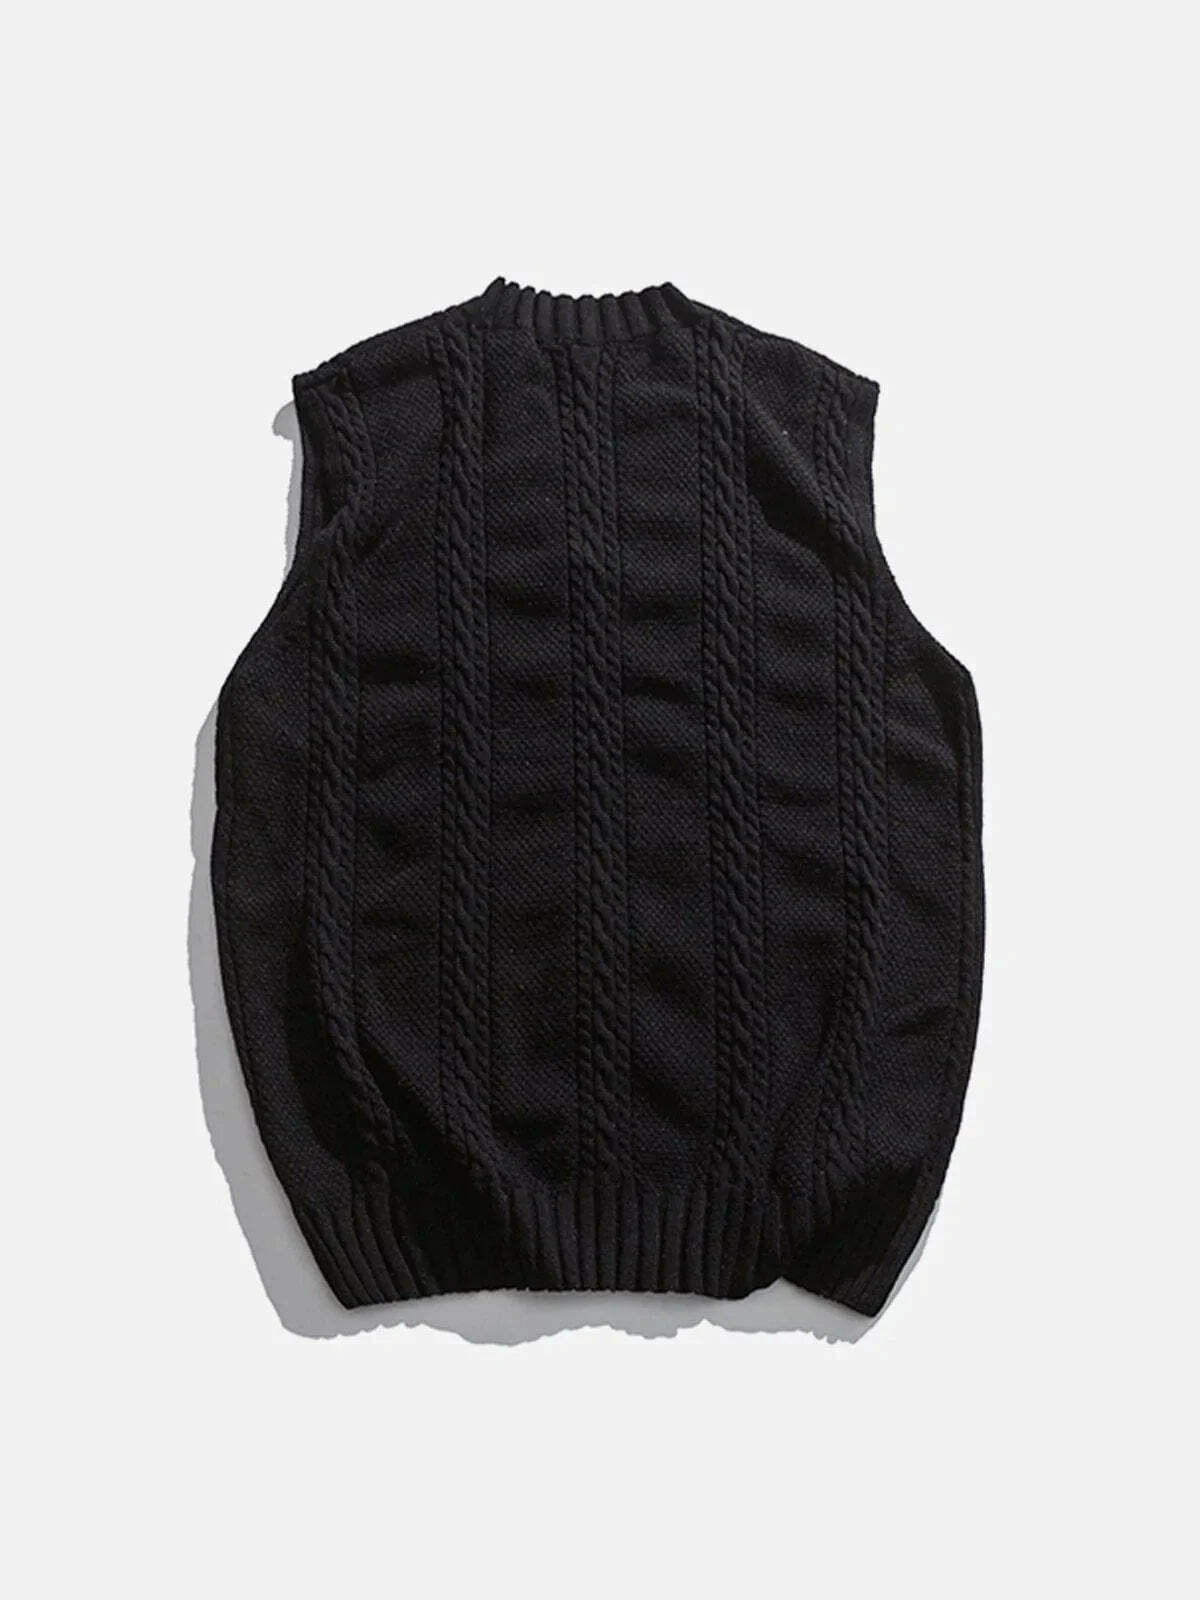 braided knit sweater vest edgy y2k fashion essential 2223